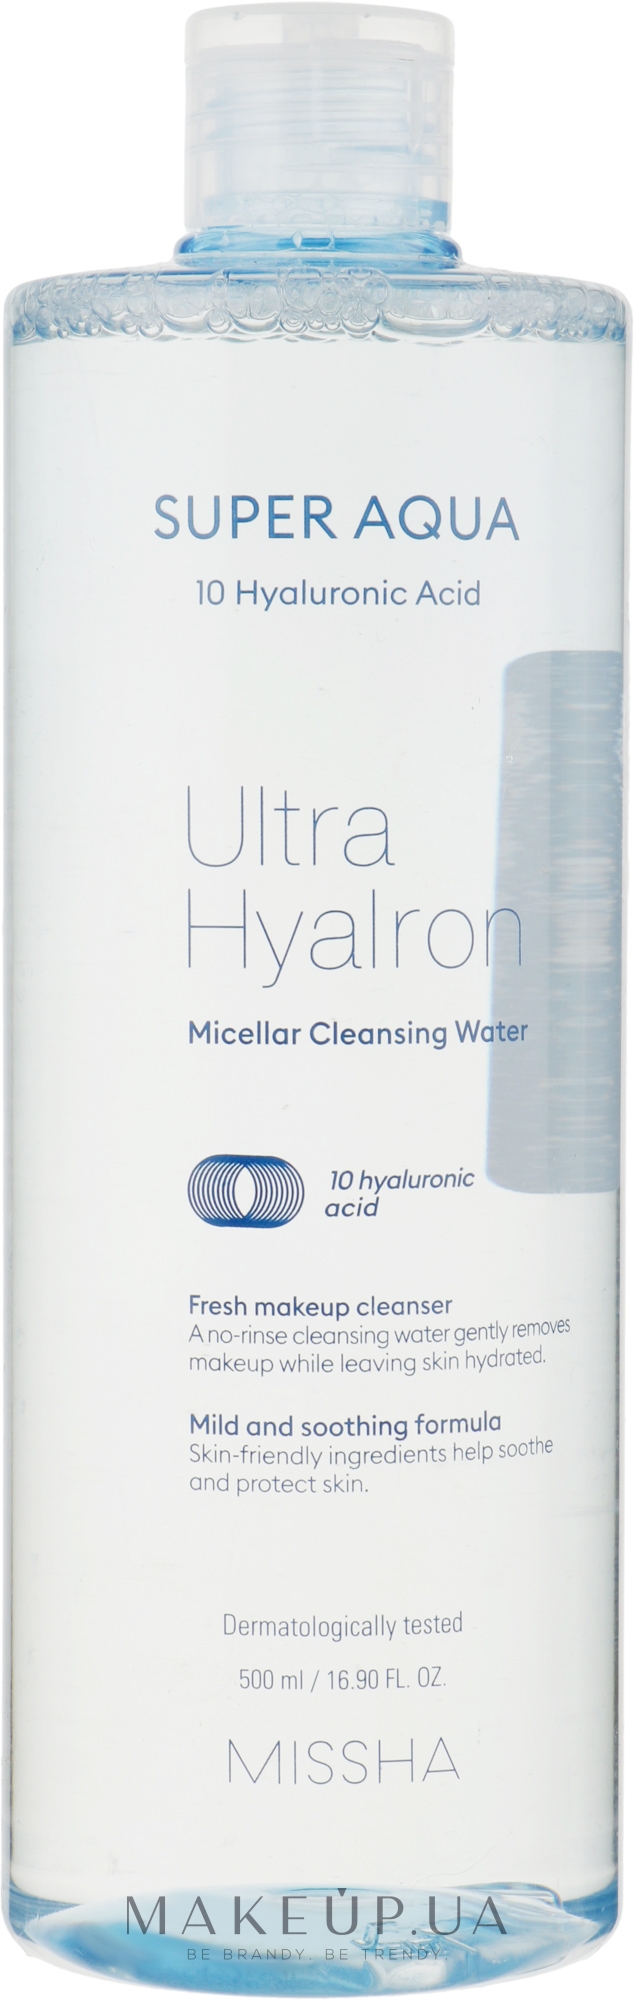 Зволожувальна міцелярна вода - Missha Super Aqua Ultra Hyalon Micellar Cleansing Water — фото 500ml